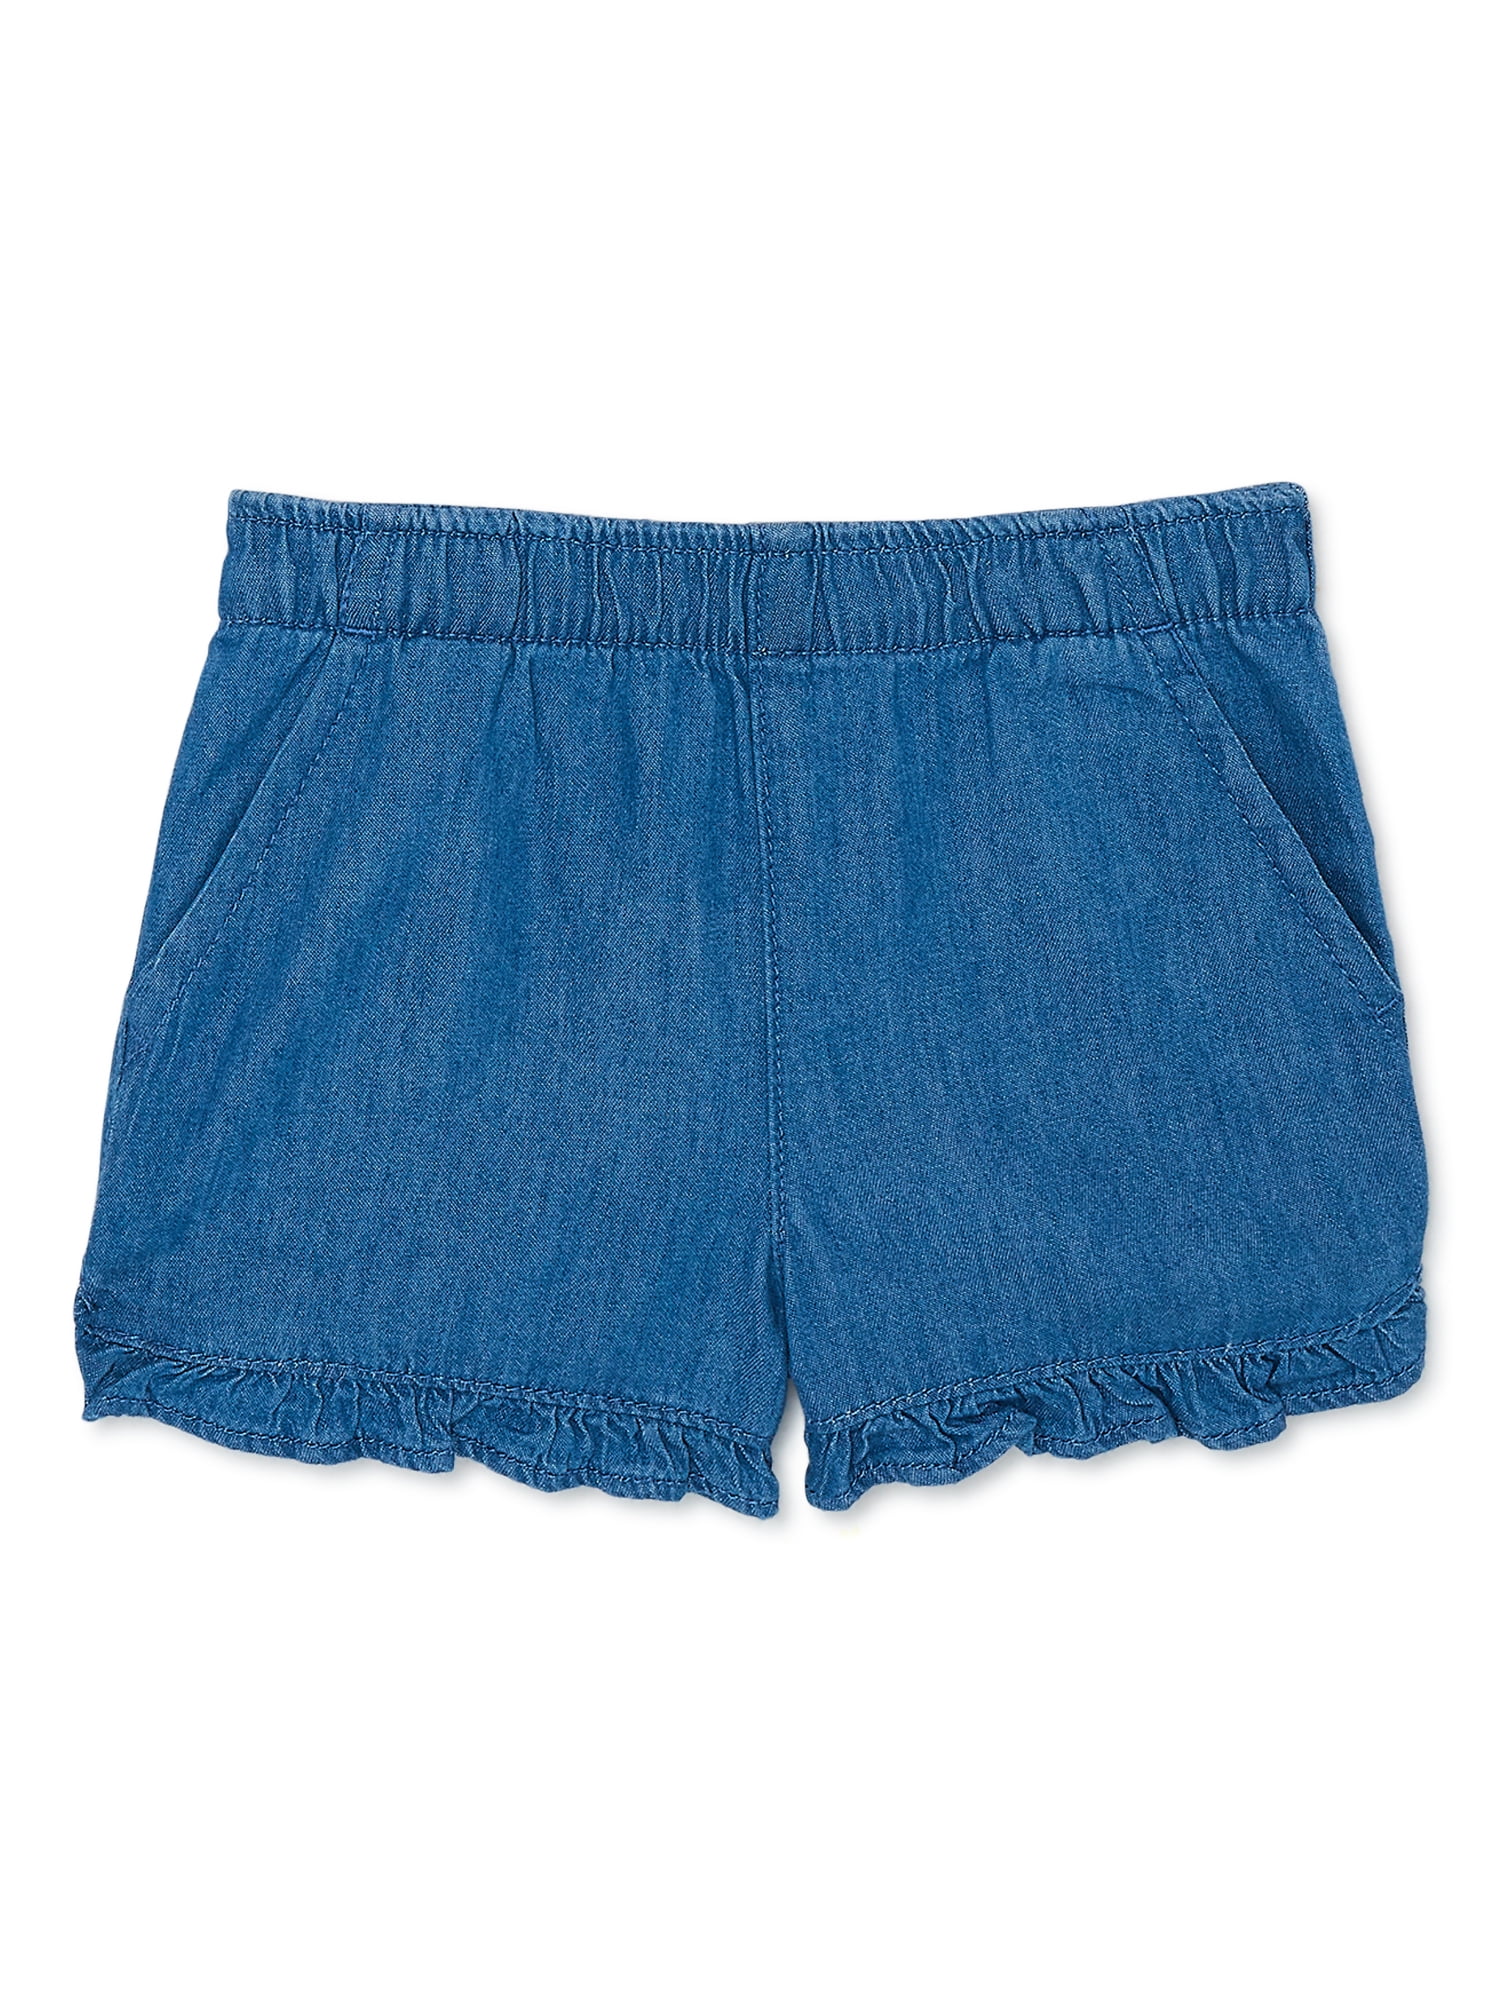 Garanimals Baby Girls Ruffle Denim Shorts, Sizes 0-24 Months